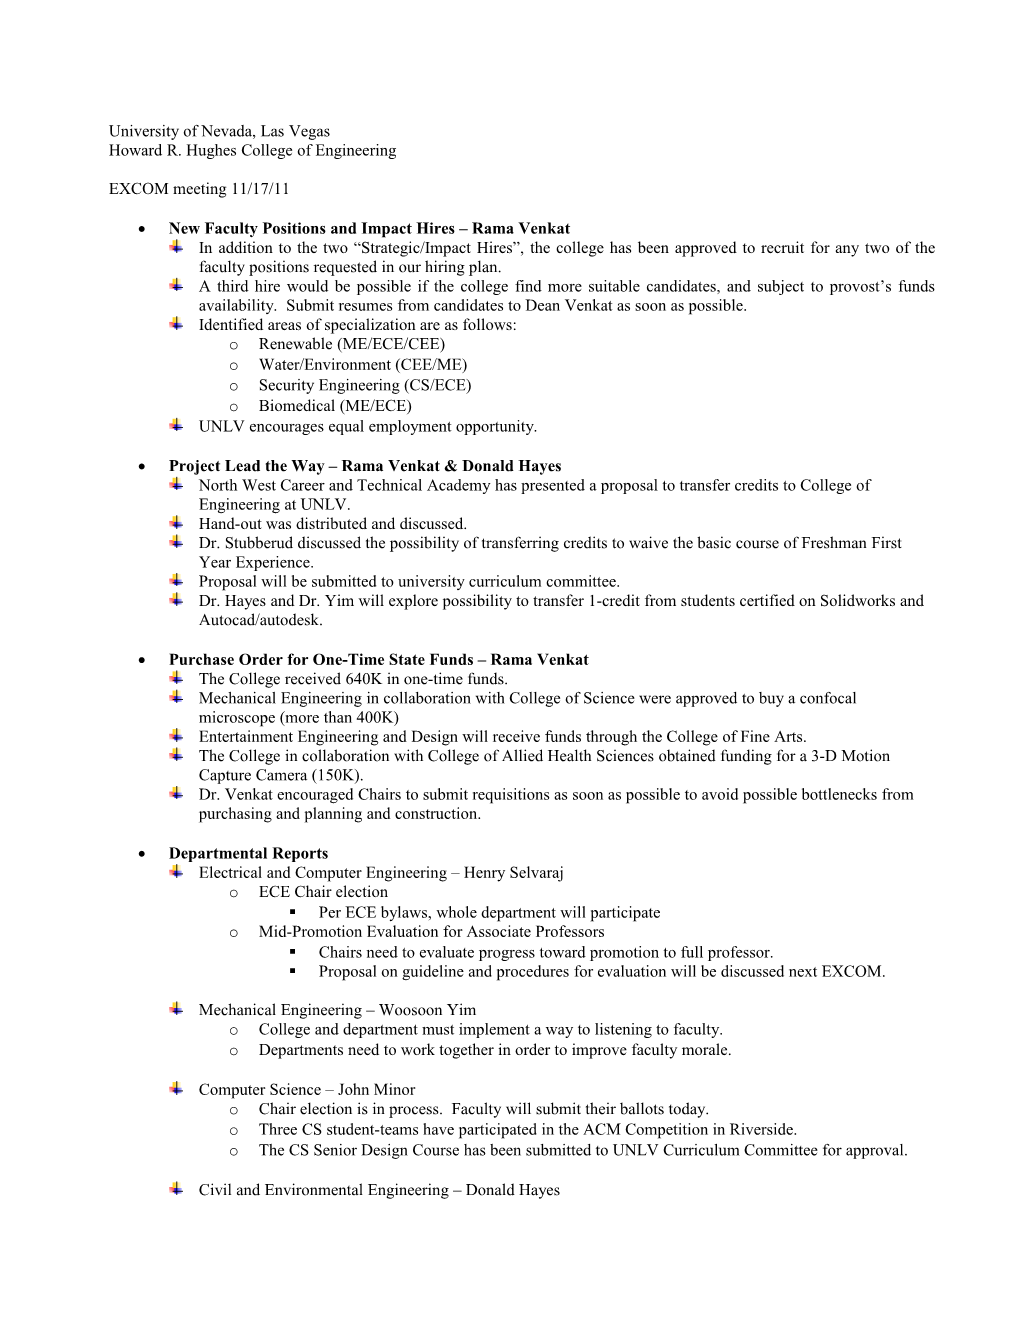 Draft Agenda for 2-19-09 PI Meeting